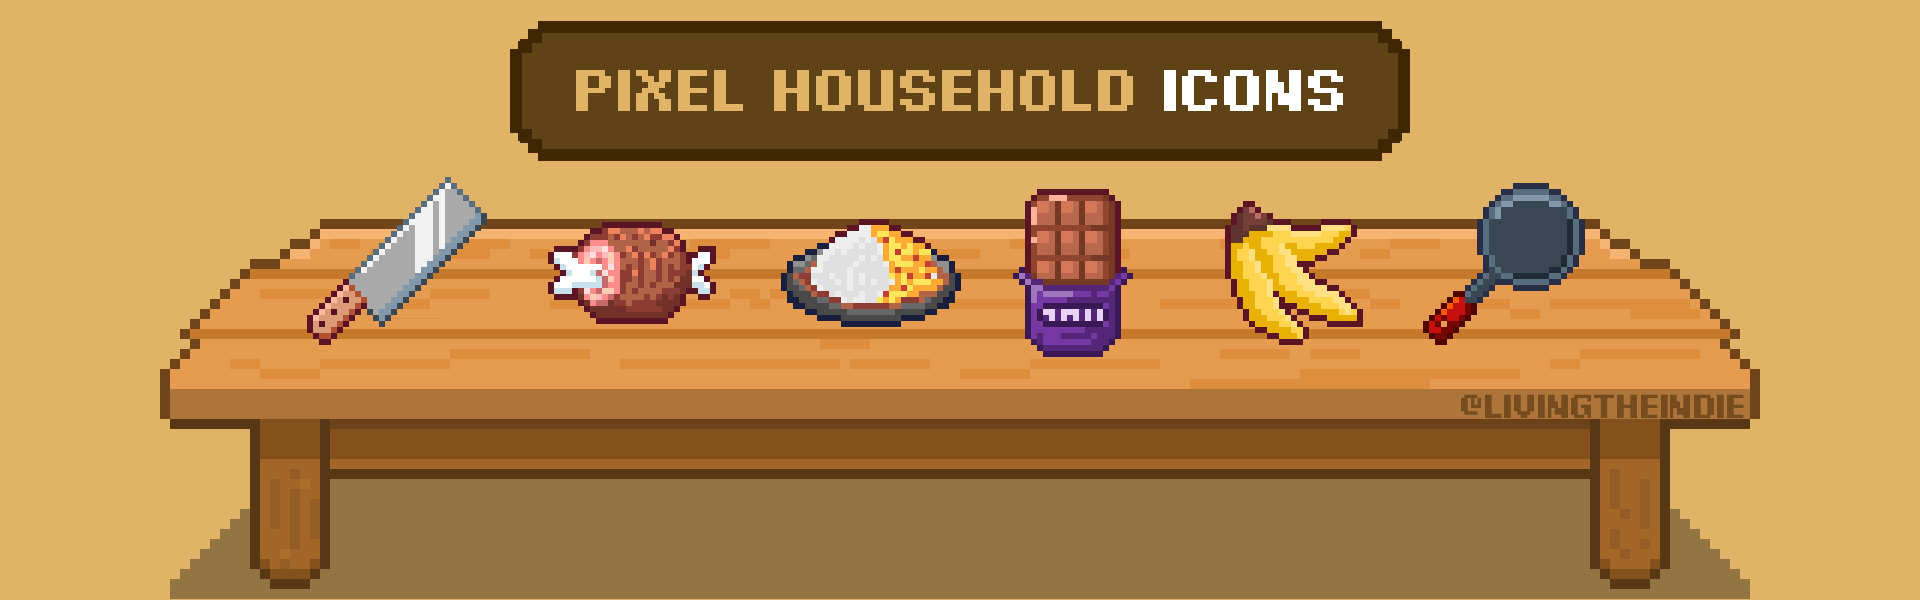 Pixel Household Icons